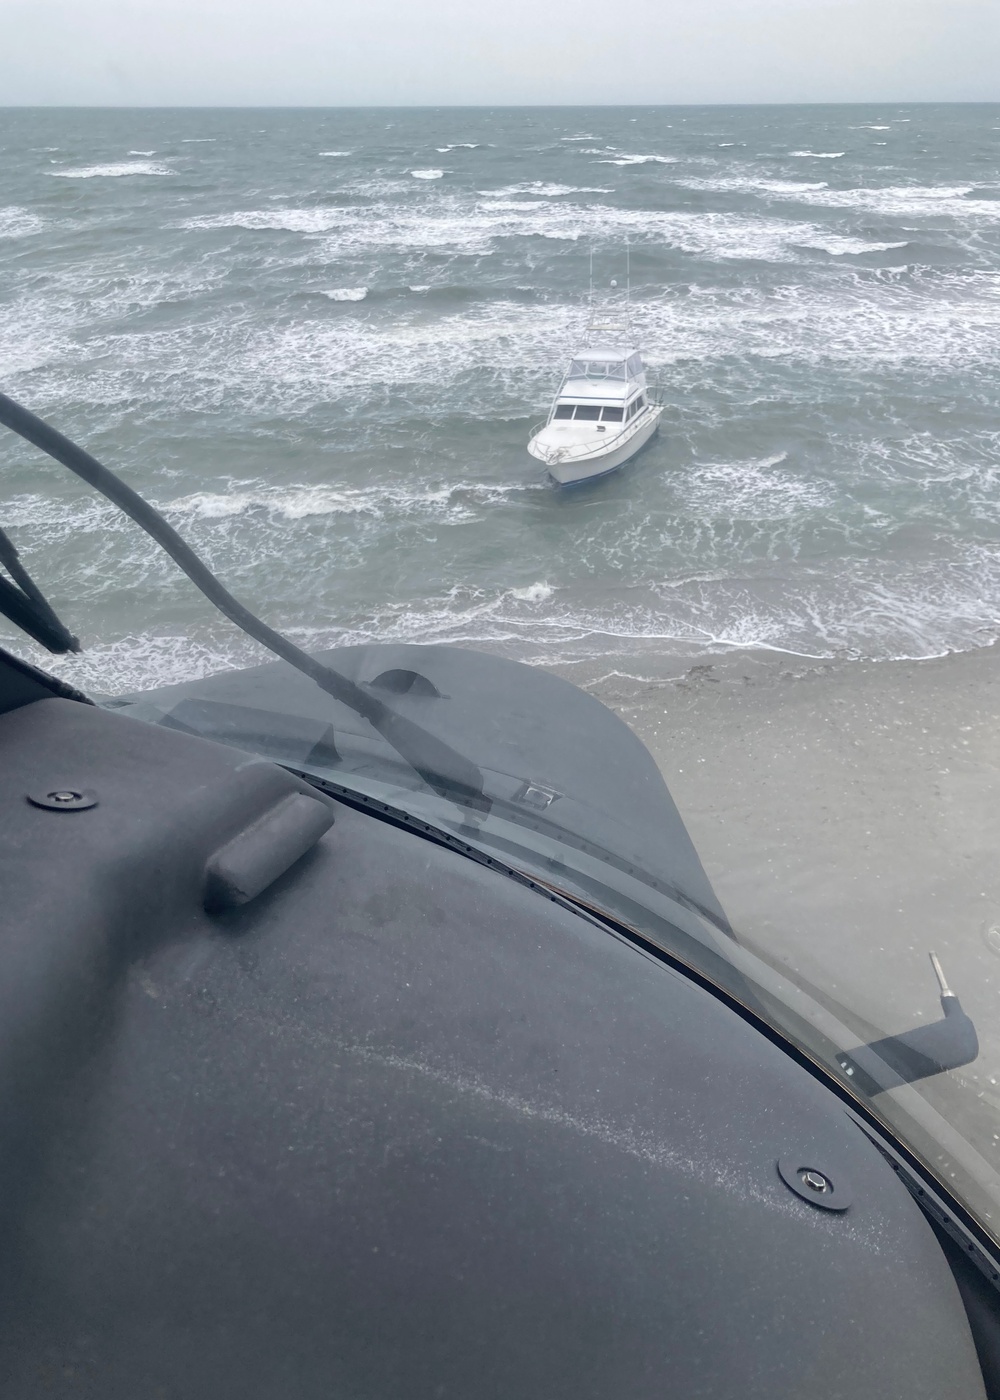 Coast Guard rescues 2, assists 3 near Chandeleur Islands